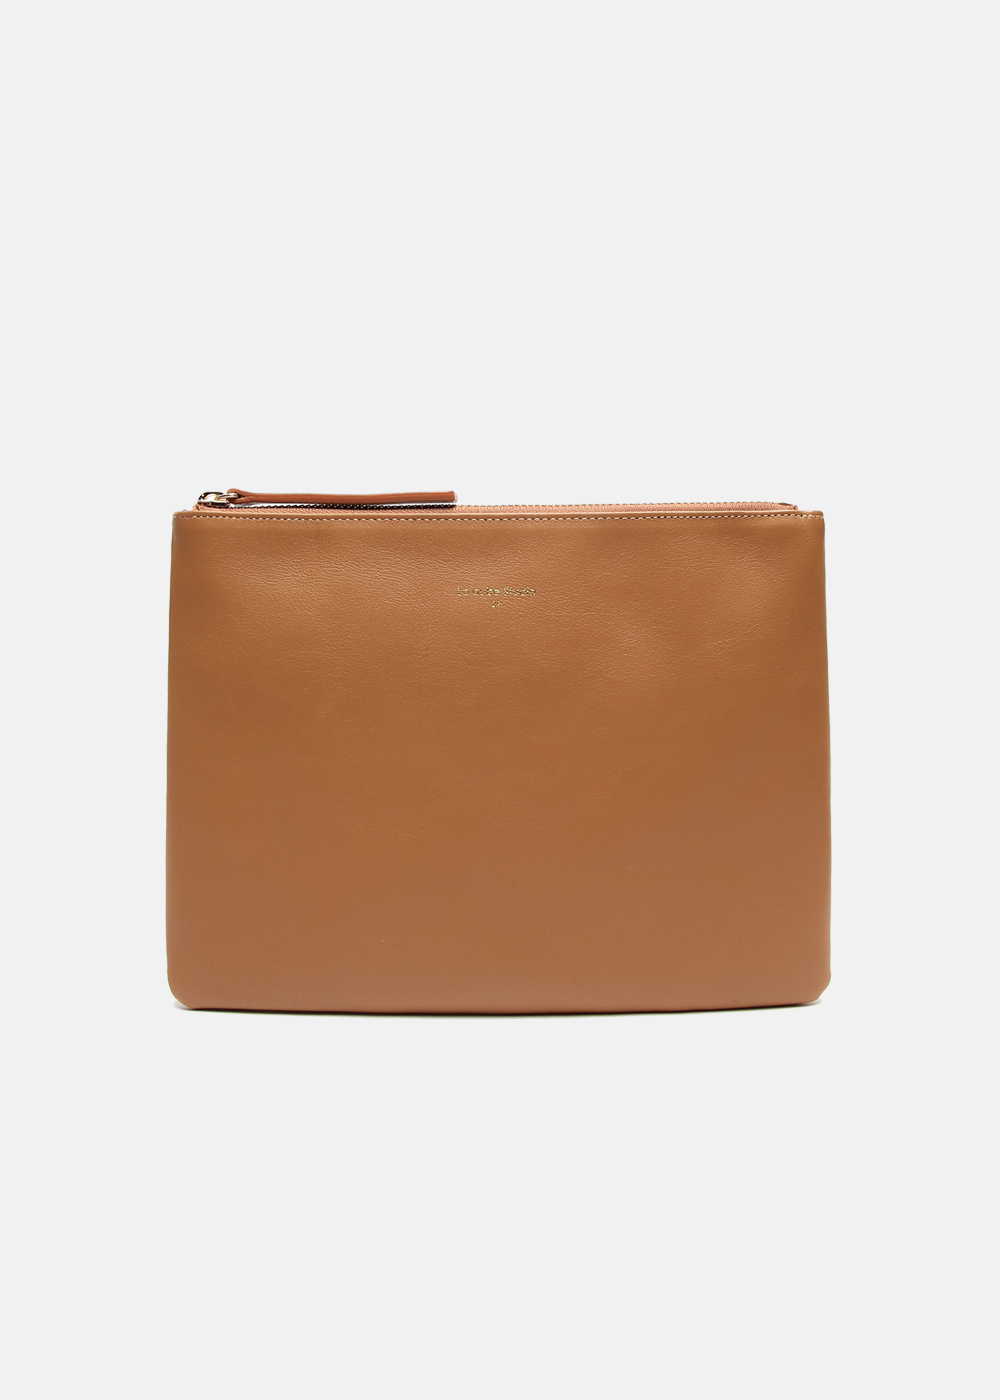 classic clutch bag 2.9 tan brown